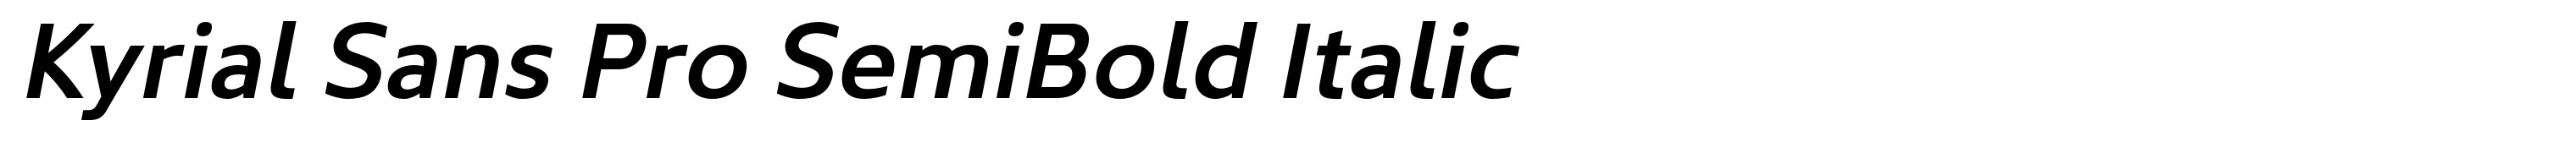 Kyrial Sans Pro SemiBold Italic